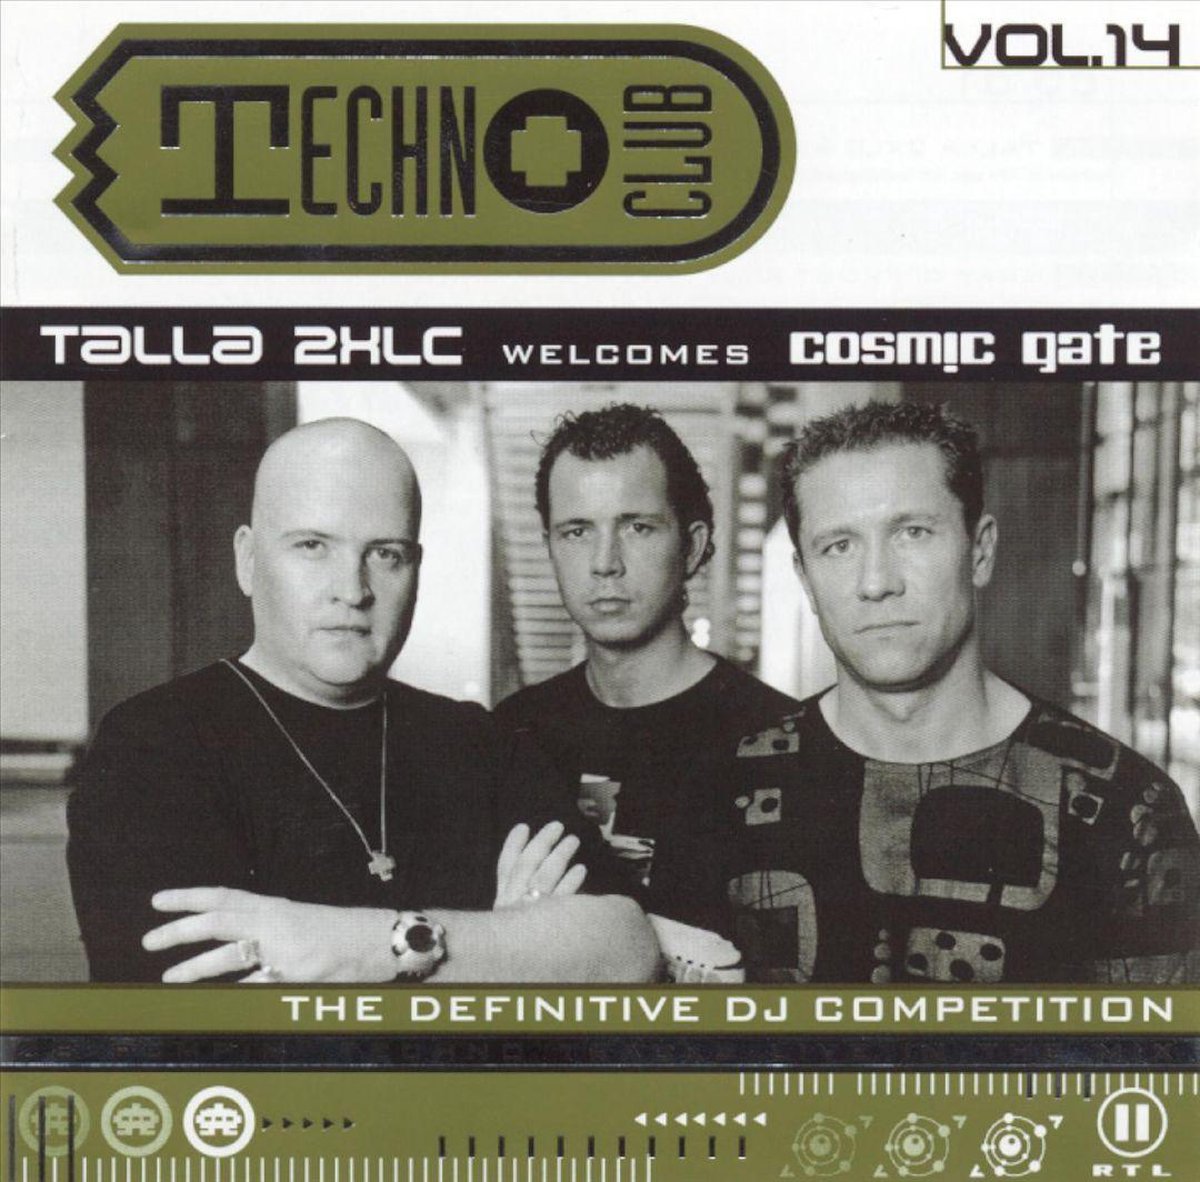 Techno Club, Vol. 14: Talla 2XLC Welcomes Cosmic Gate - various artists